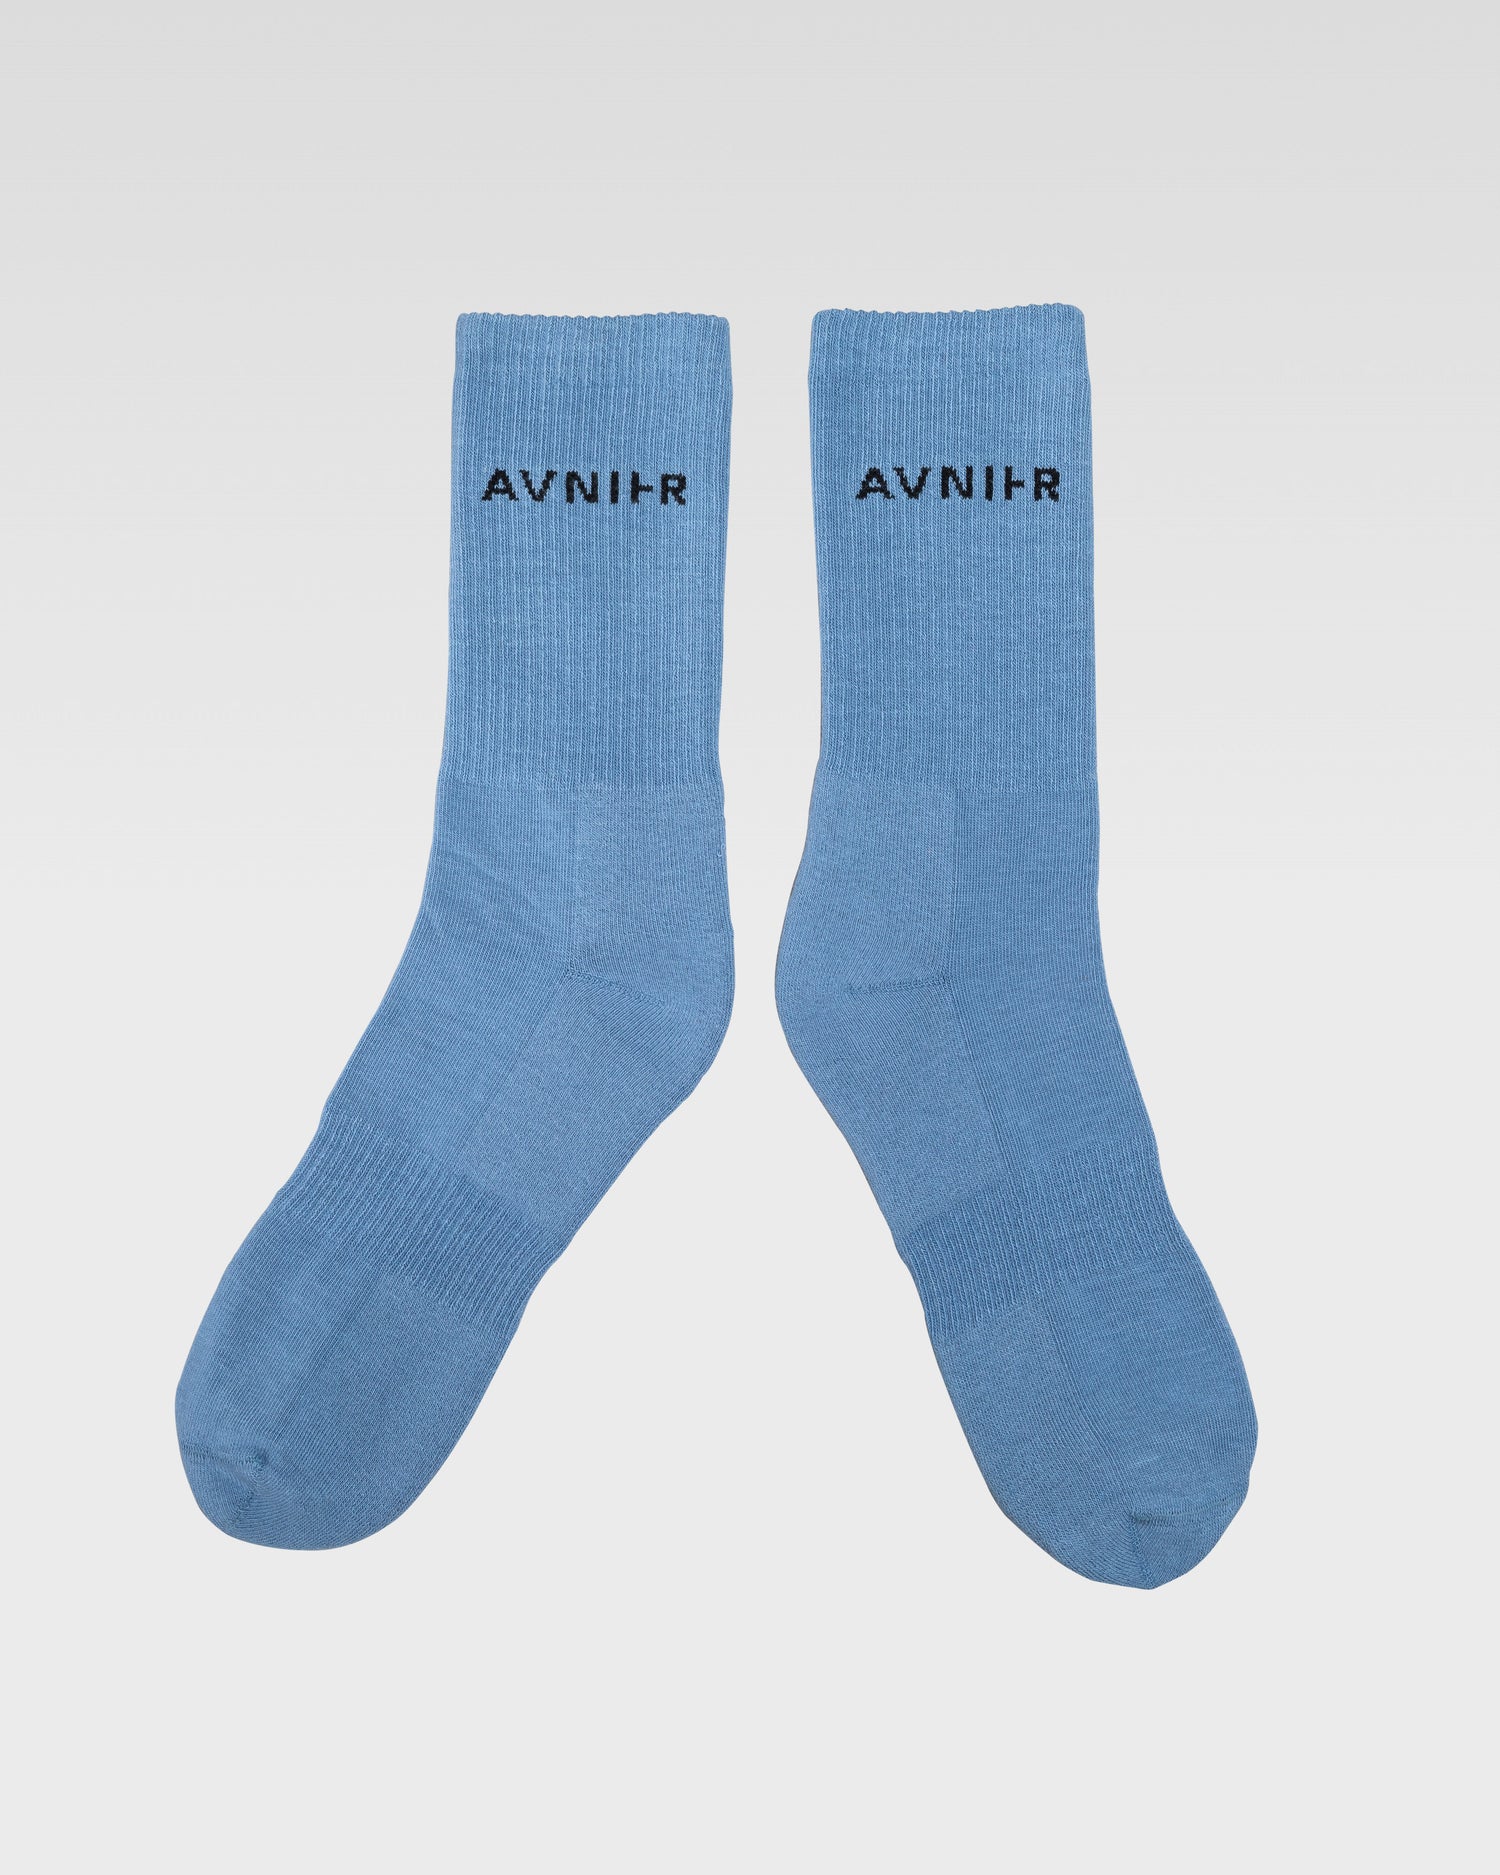 socks-loop-allure-horizontal-avnier-vetement-orelsan-2-packshot-face - bleu ciel